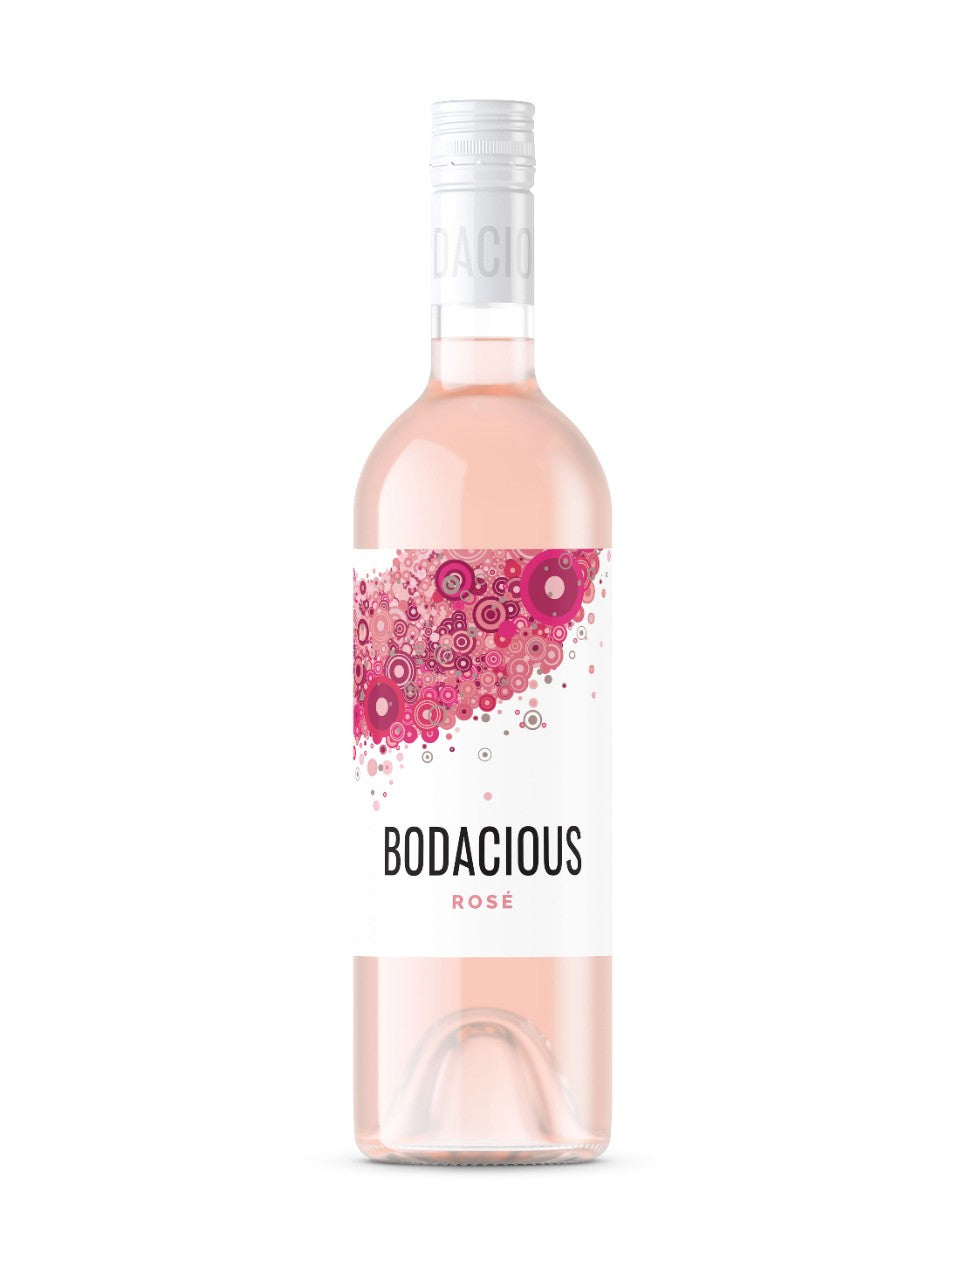 Bodacious Rosé 750 ml bottle